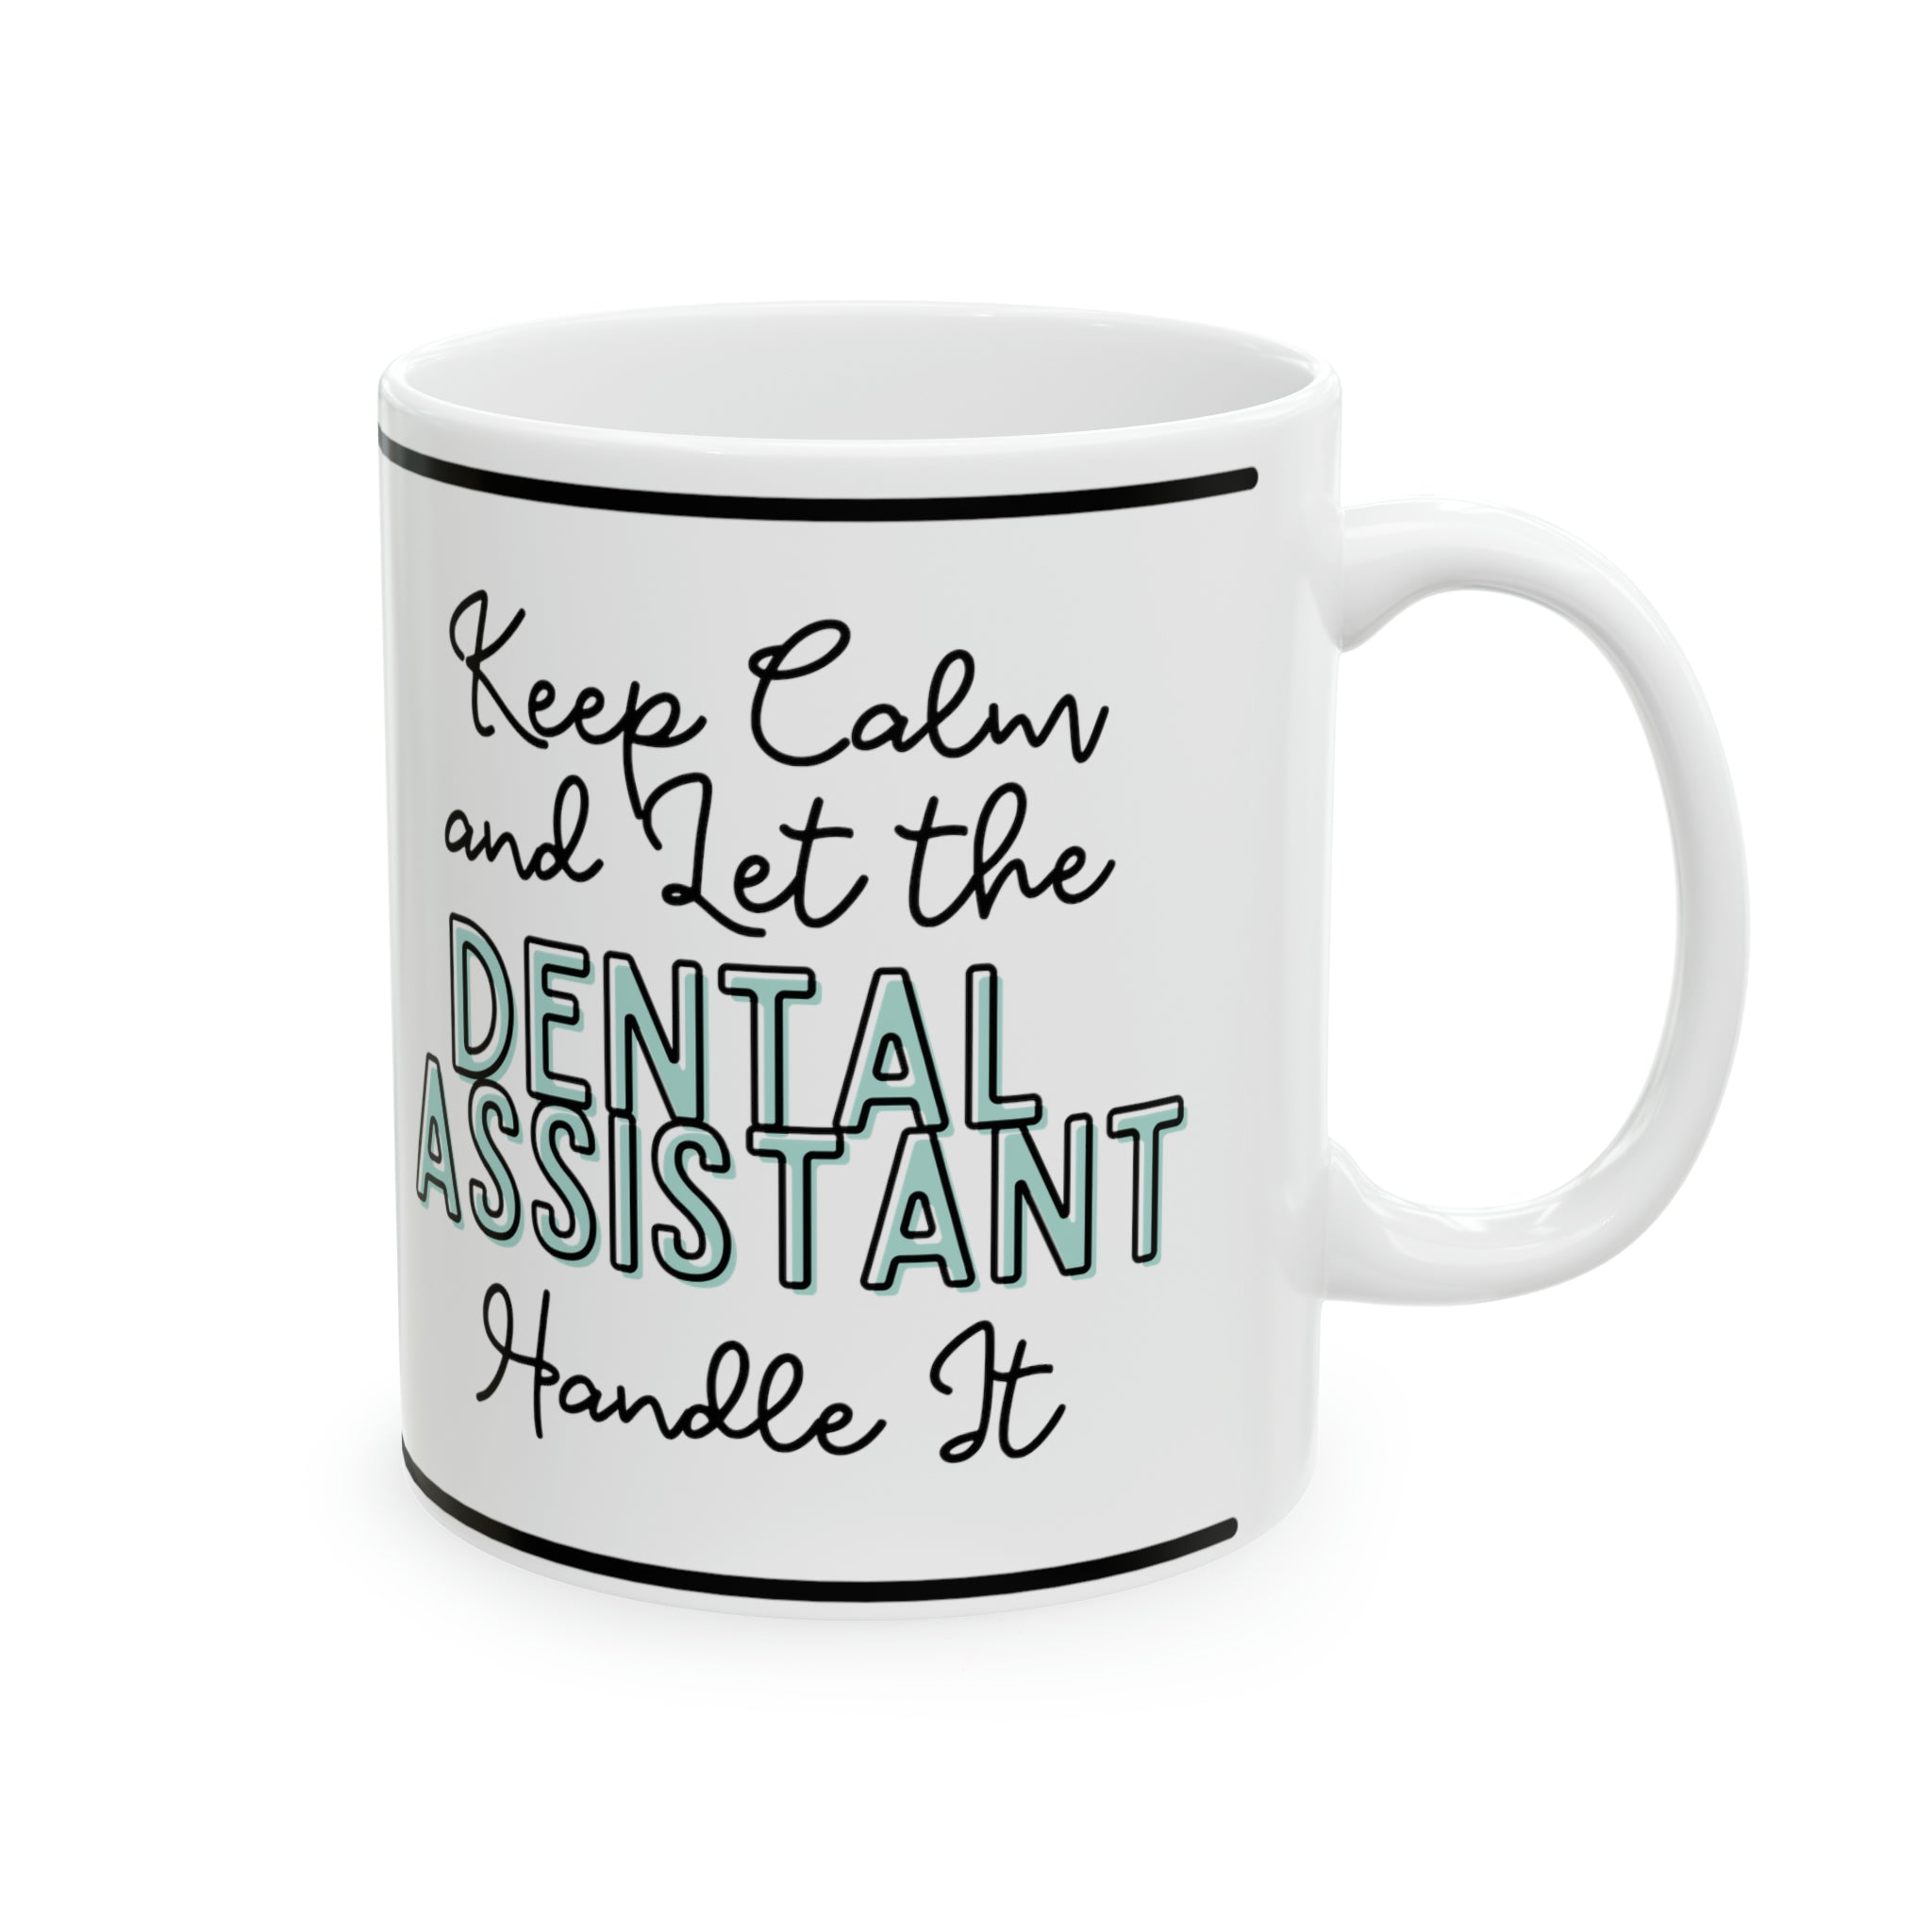 Keep Calm and let the Dental Assistant Handle It - Ceramic Mug, 11oz